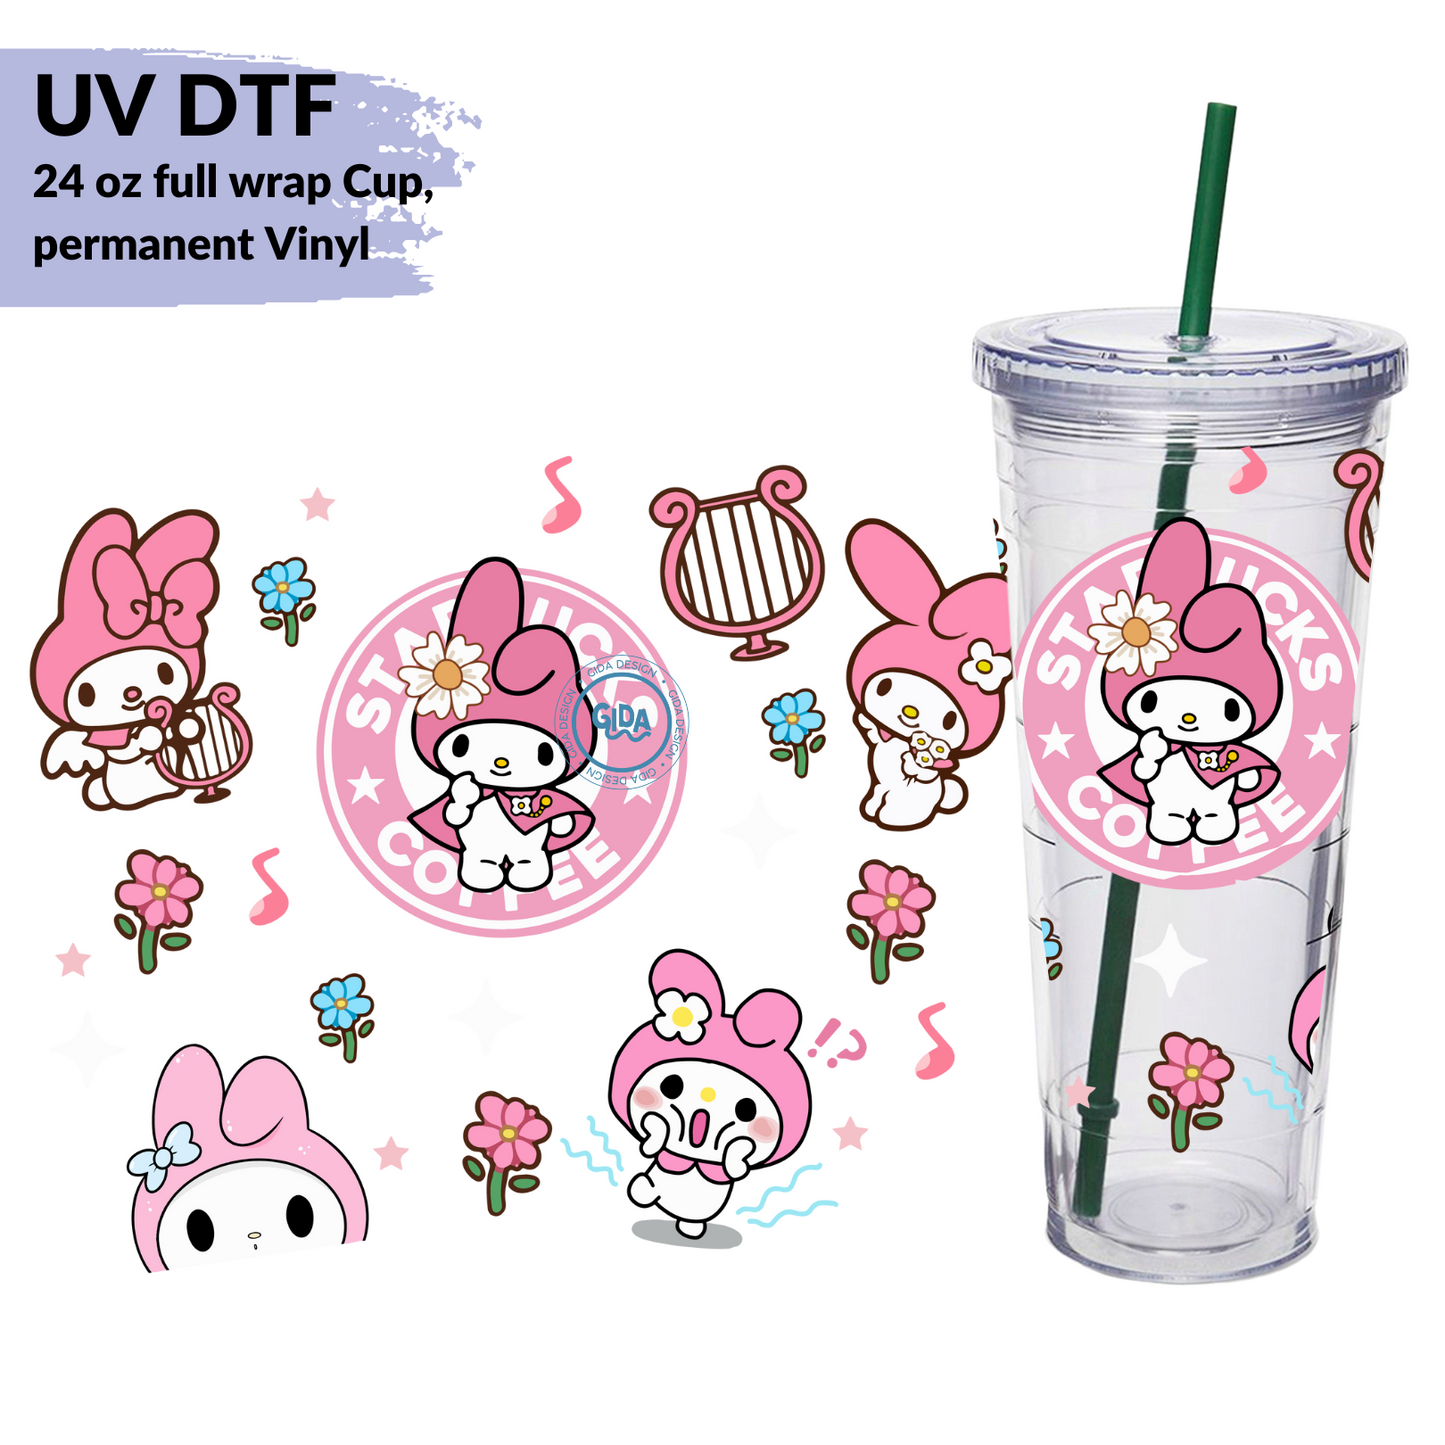 UV DTF - Pink Melody 24 oz